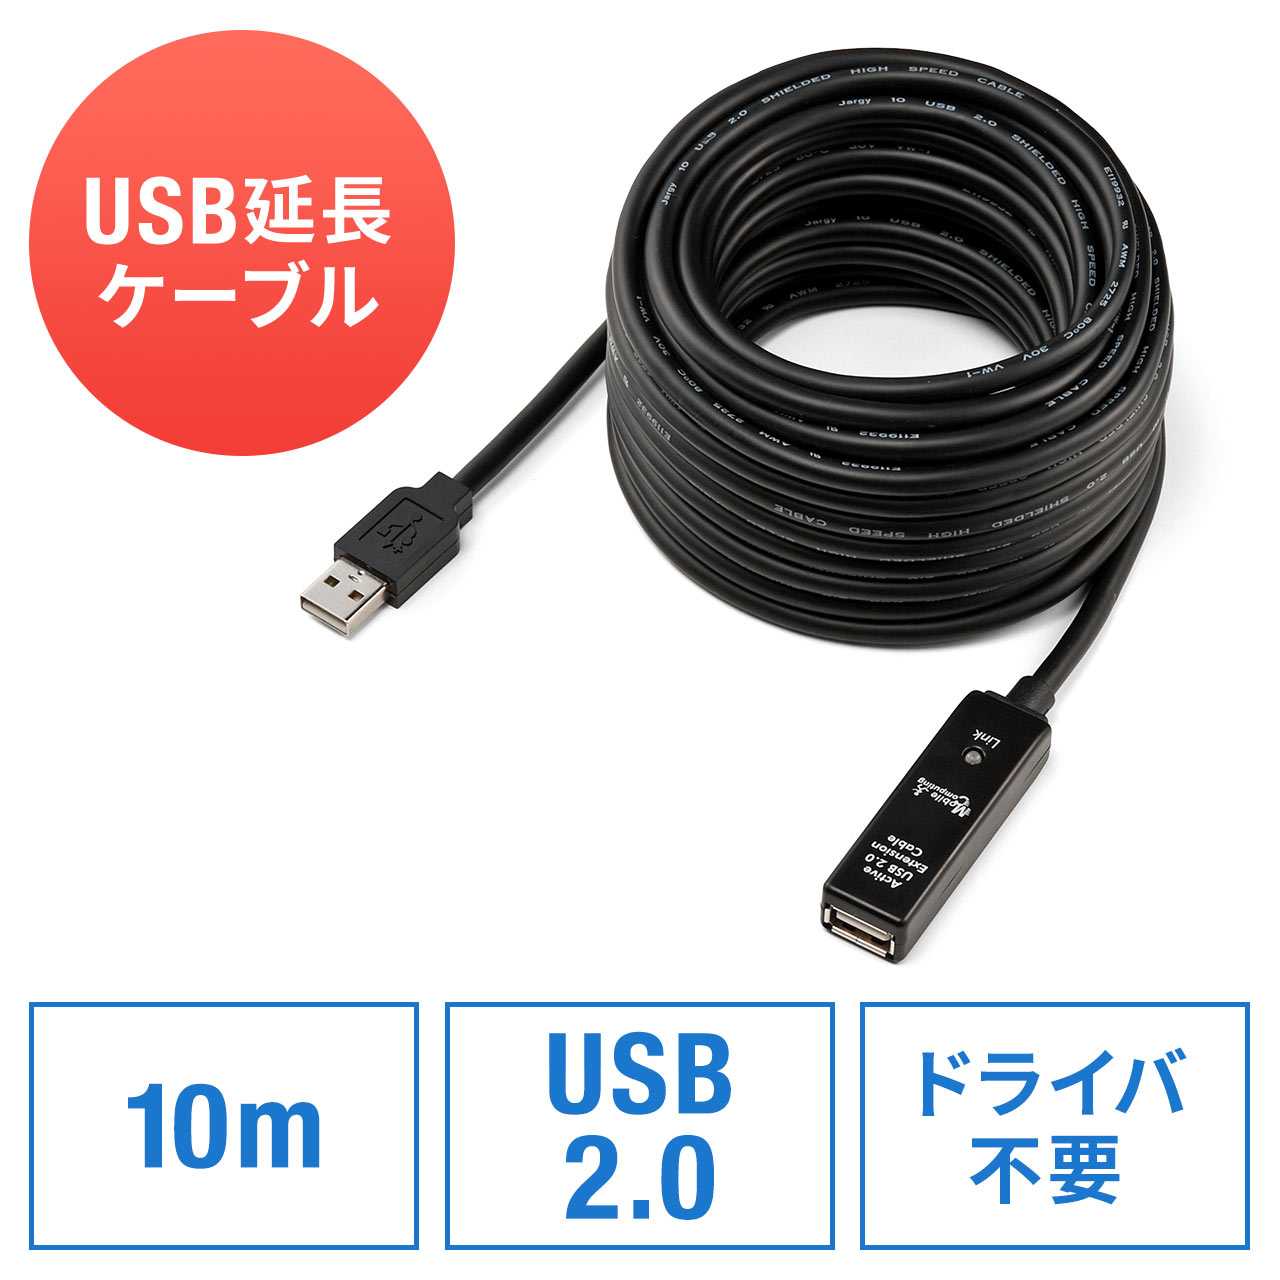 USBリピーターケーブル 10m USB2.0 ブラック USB延長ケーブル 500-USB005